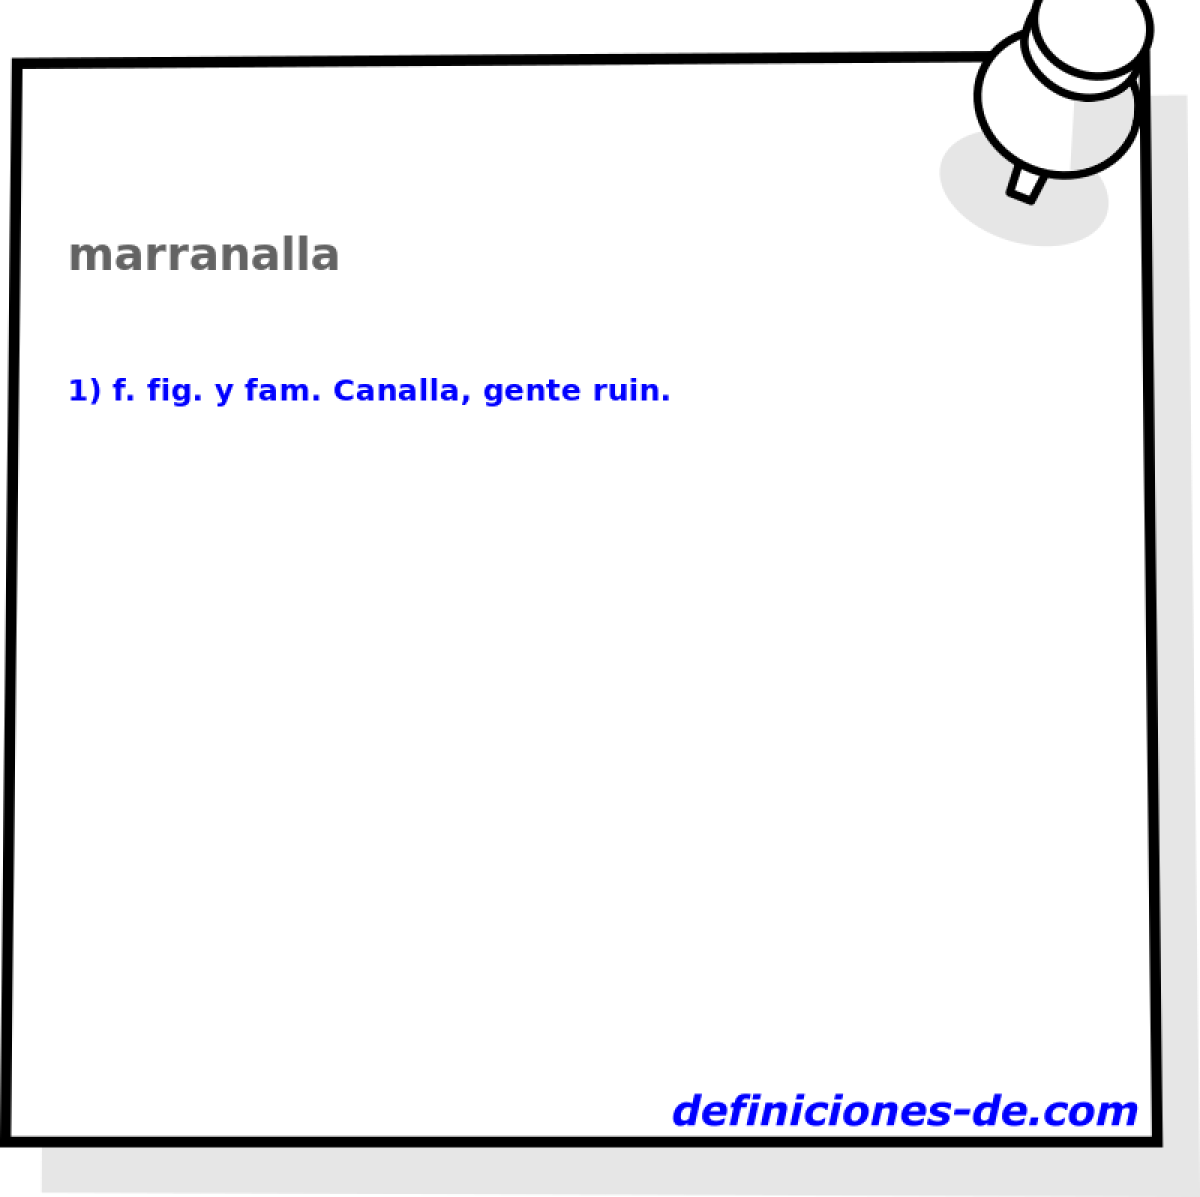 marranalla 